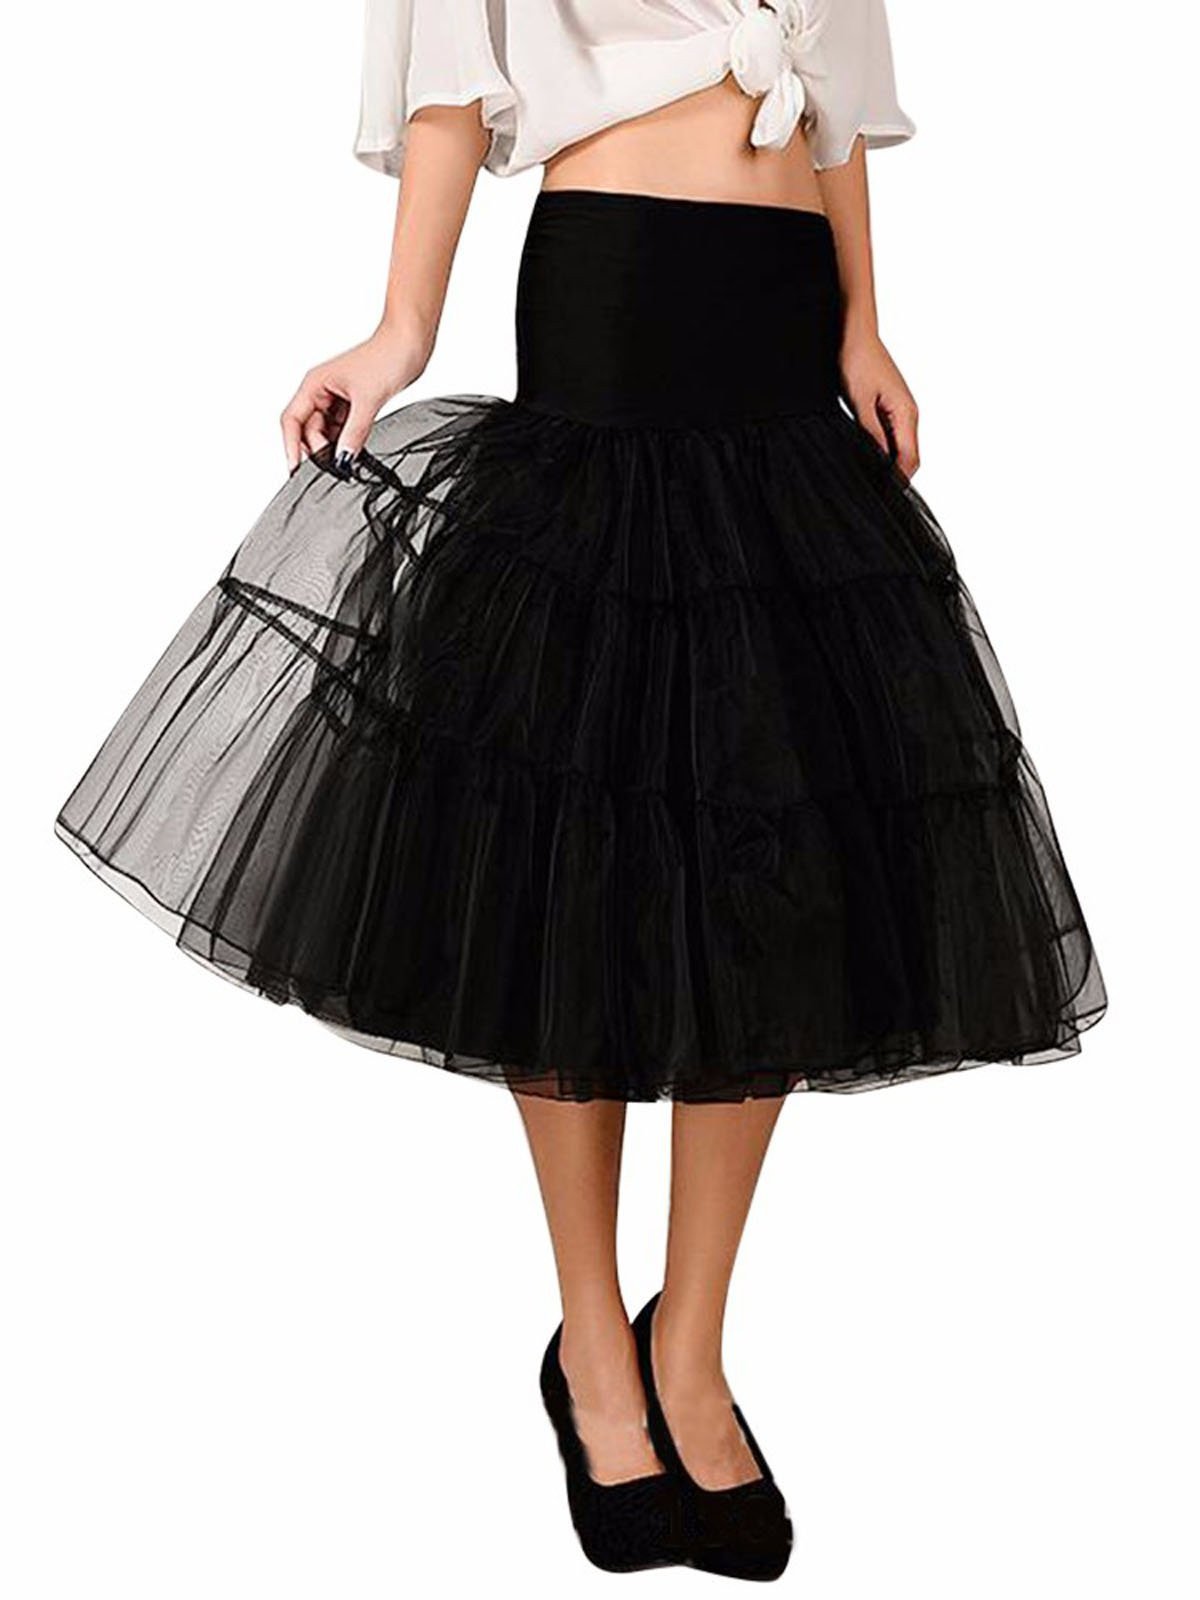 1950s Plus Size Petticoat Underskirt